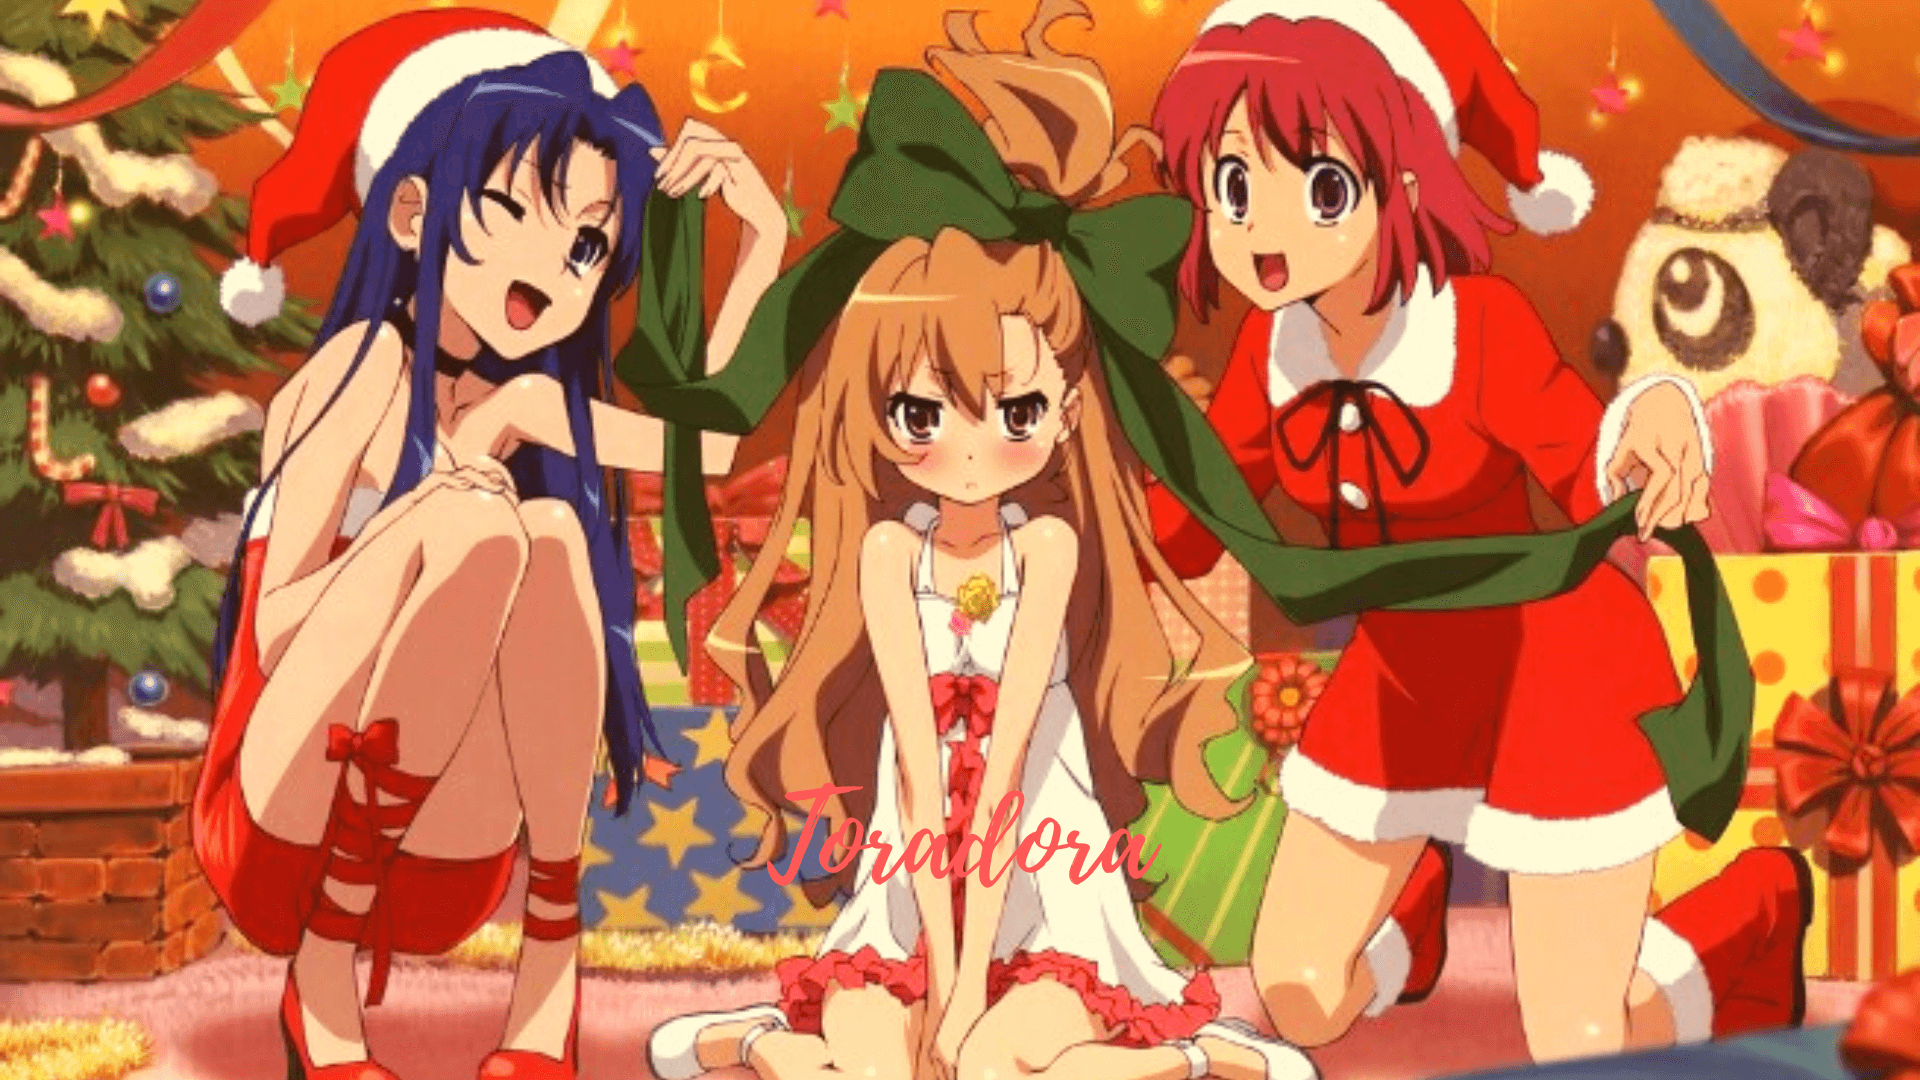 Toradora1 -The Top 10 Christmas Anime To Watch This Holiday Season